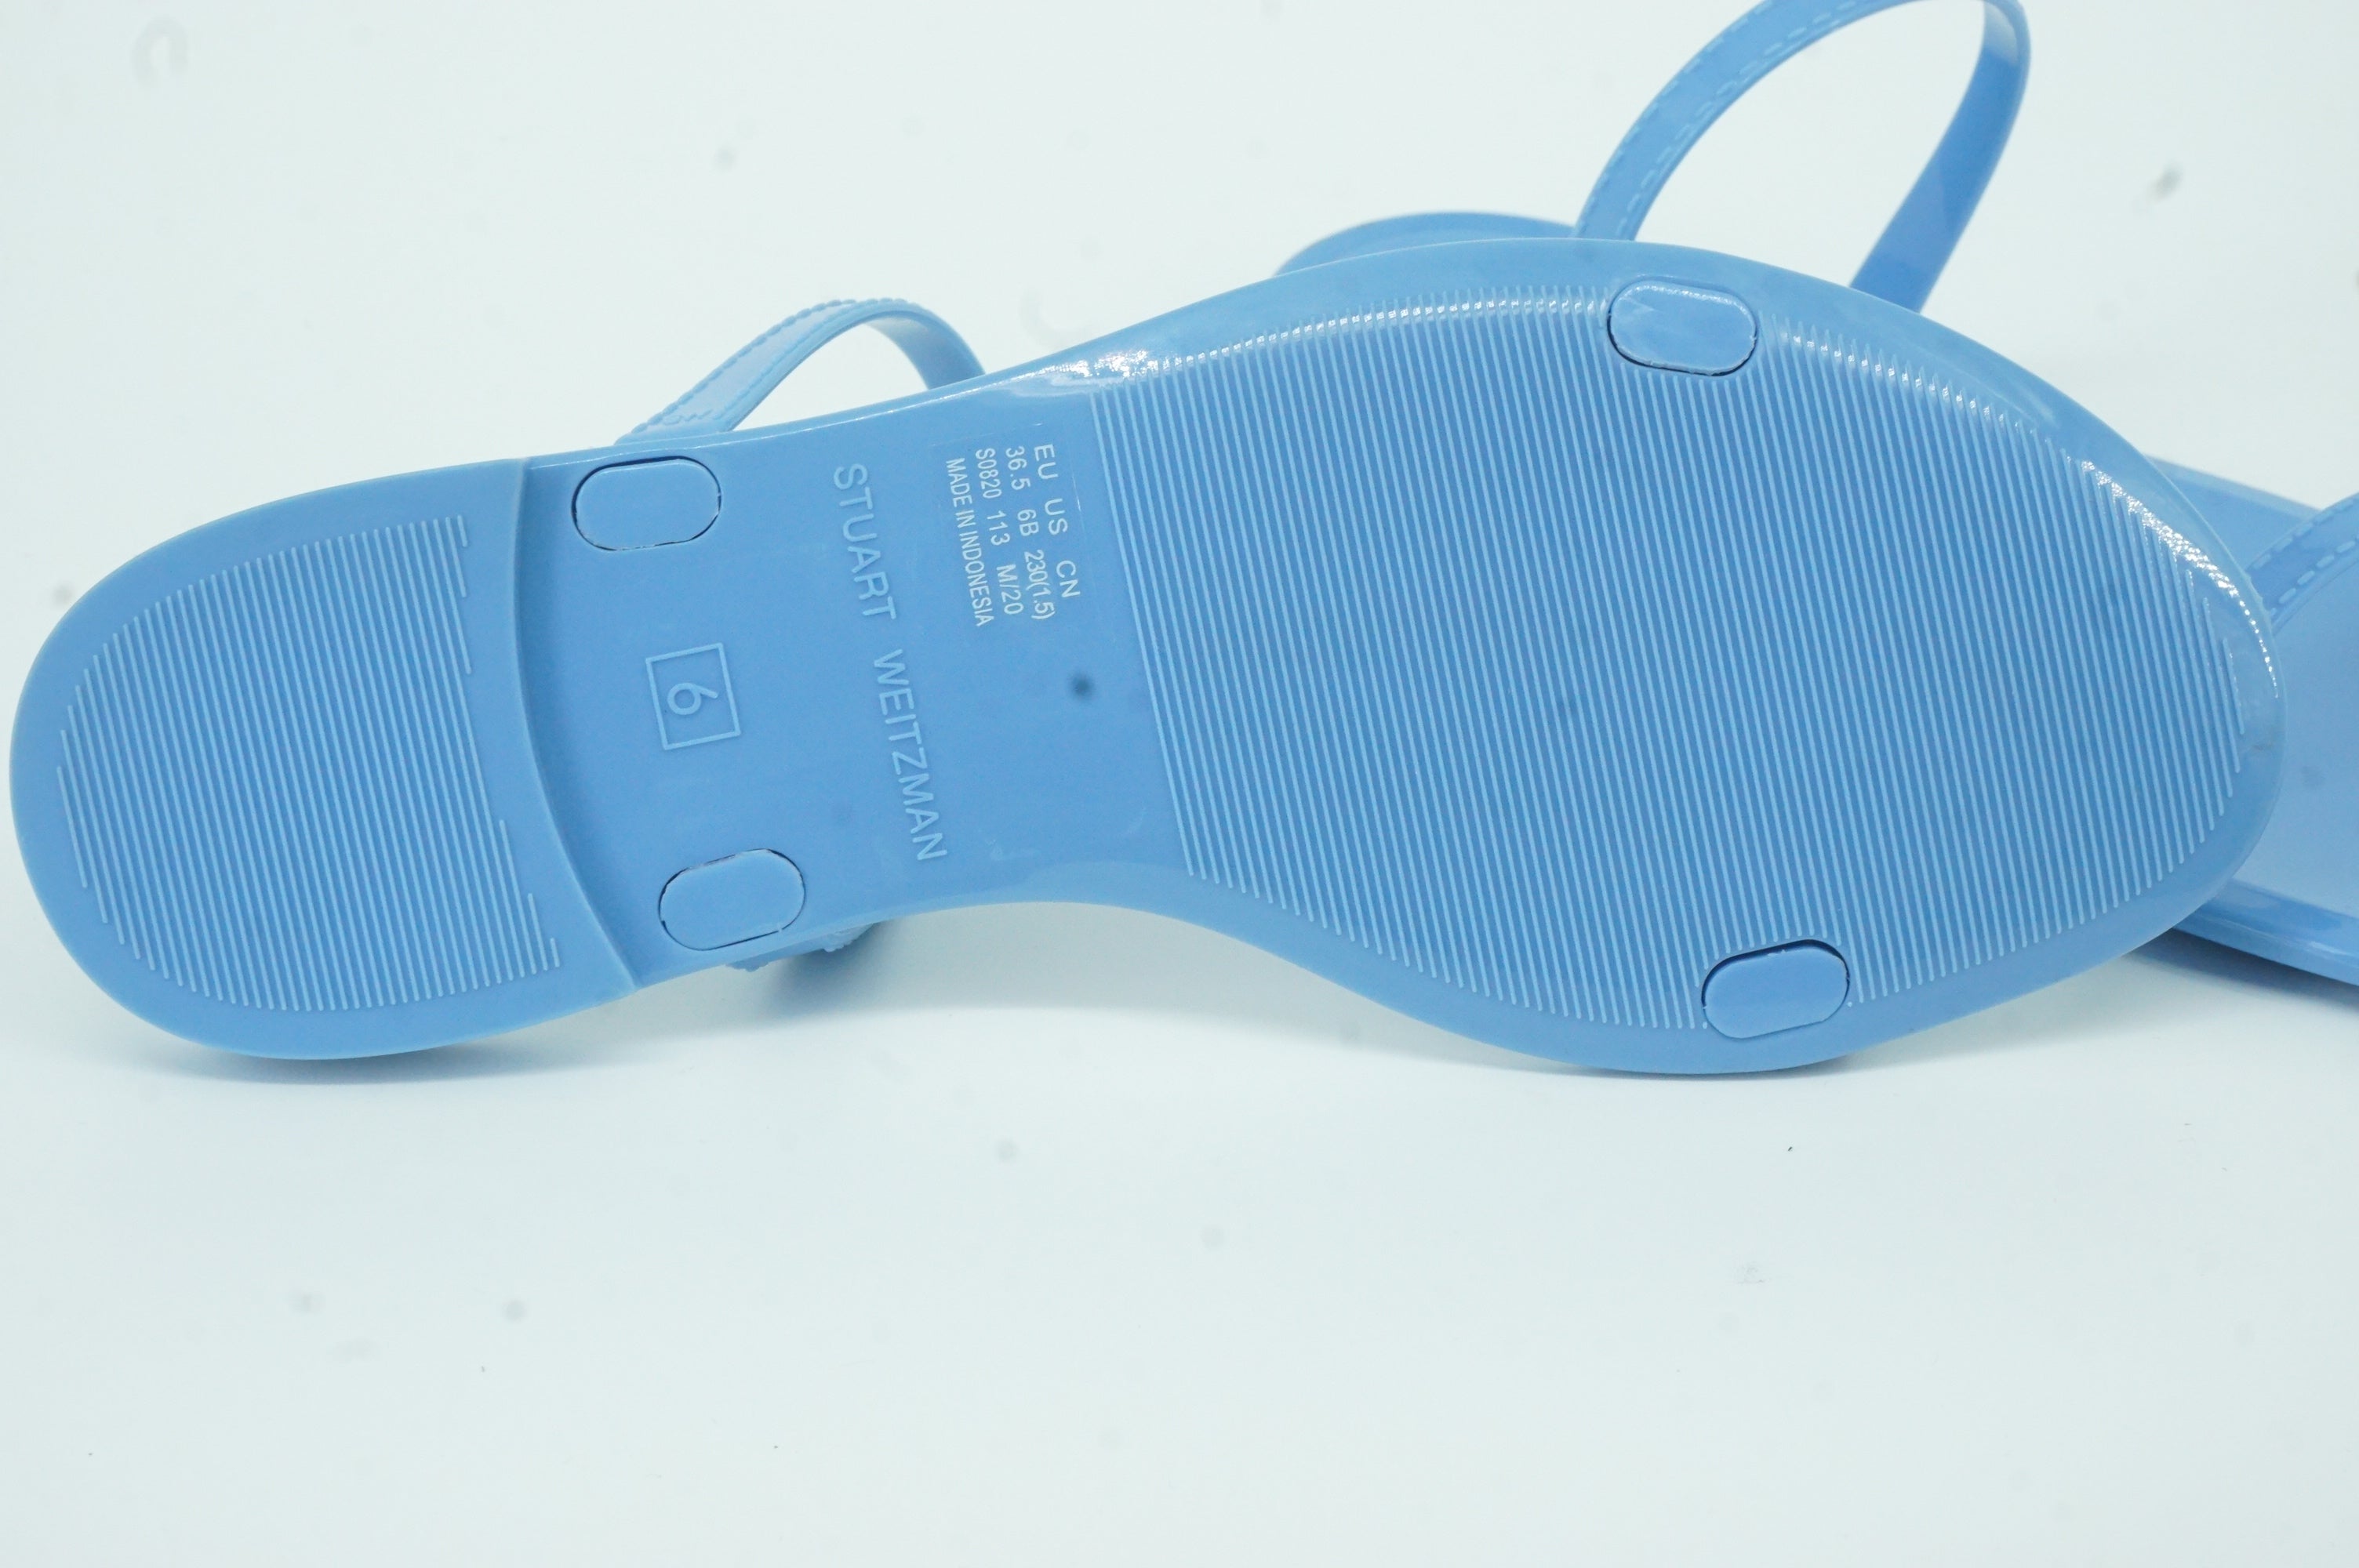 Stuart Weitzman sawyer PVC Blue Rubber Strappy Slide Sandals SZ 6 New